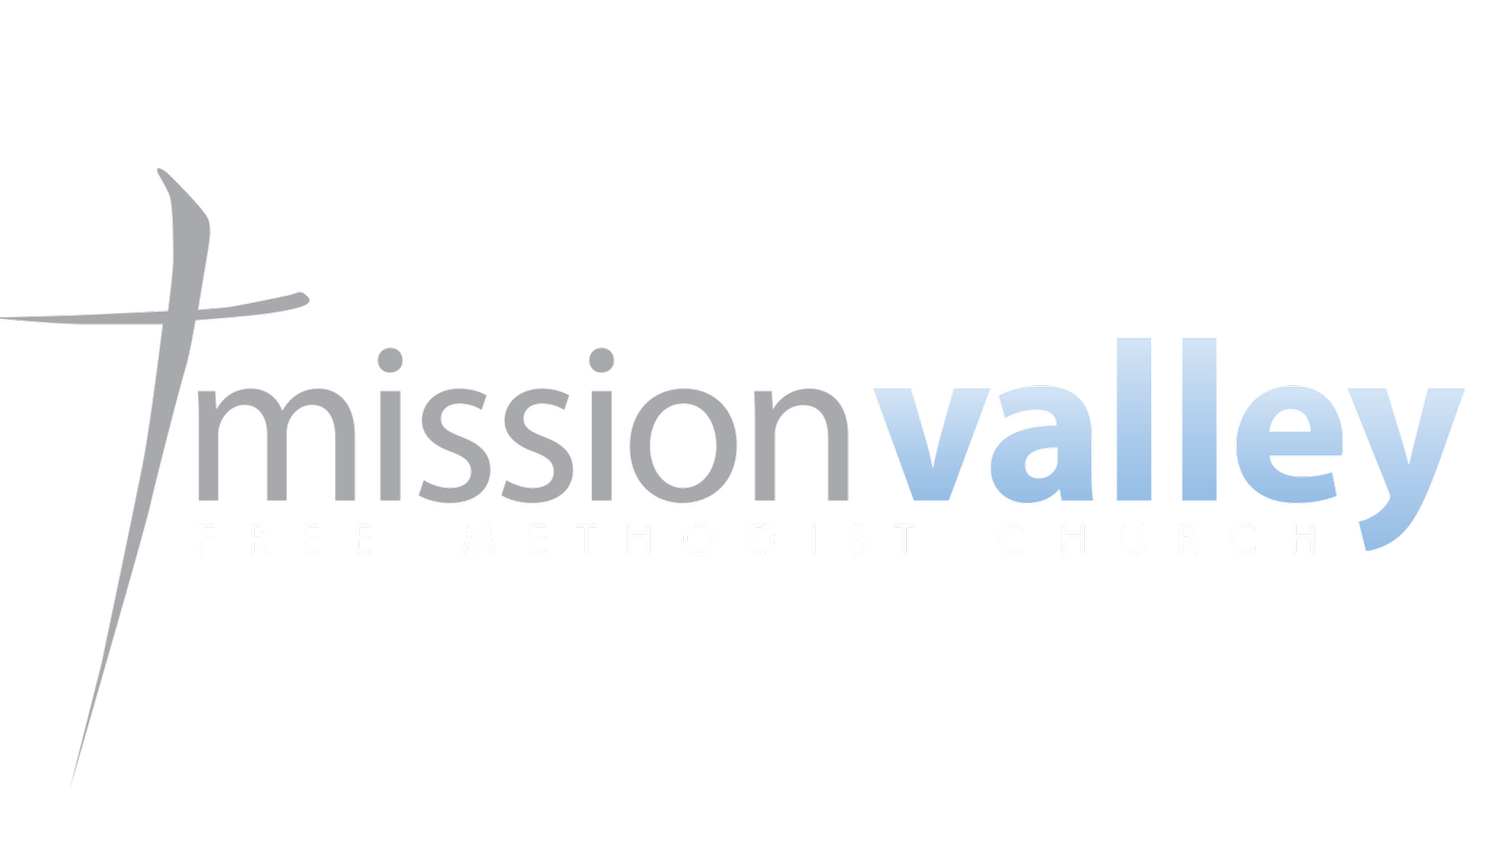 Mission Valley Free Methodist Church